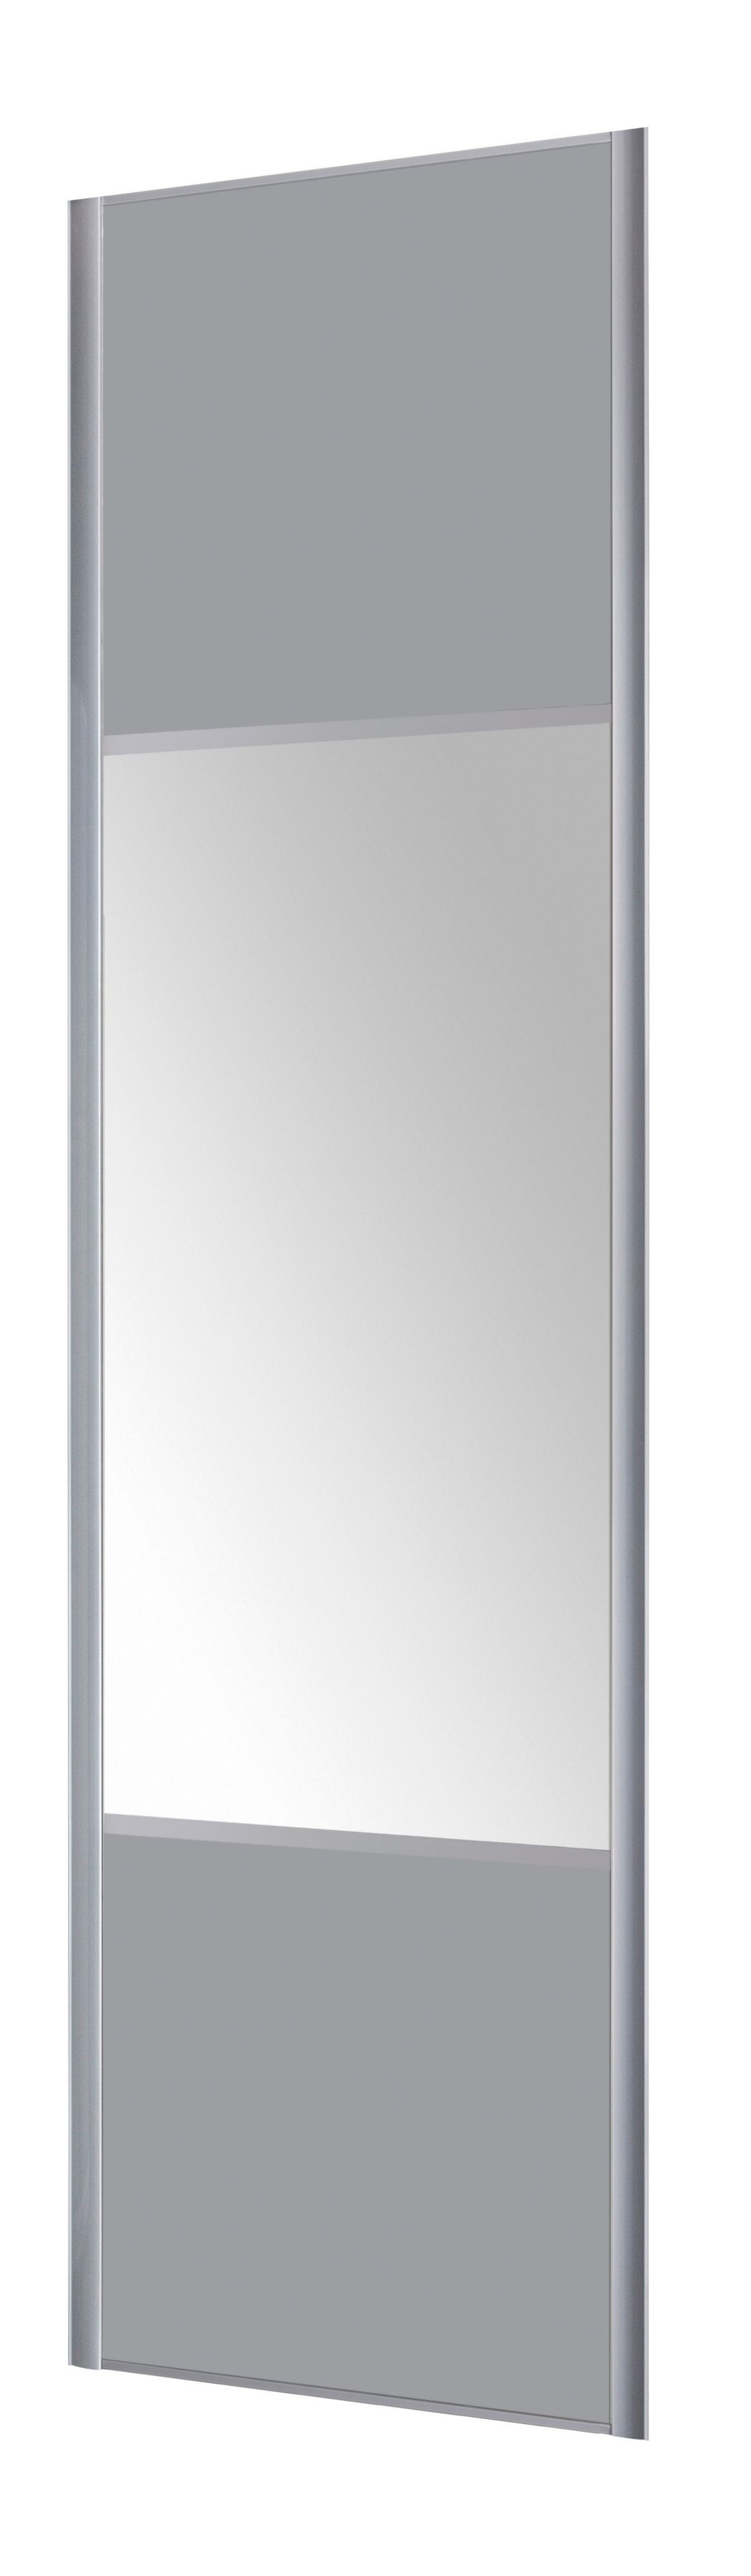 Form Valla Panelled Light grey Mirrored Sliding wardrobe door (H) 2260mm x (W) 772mm